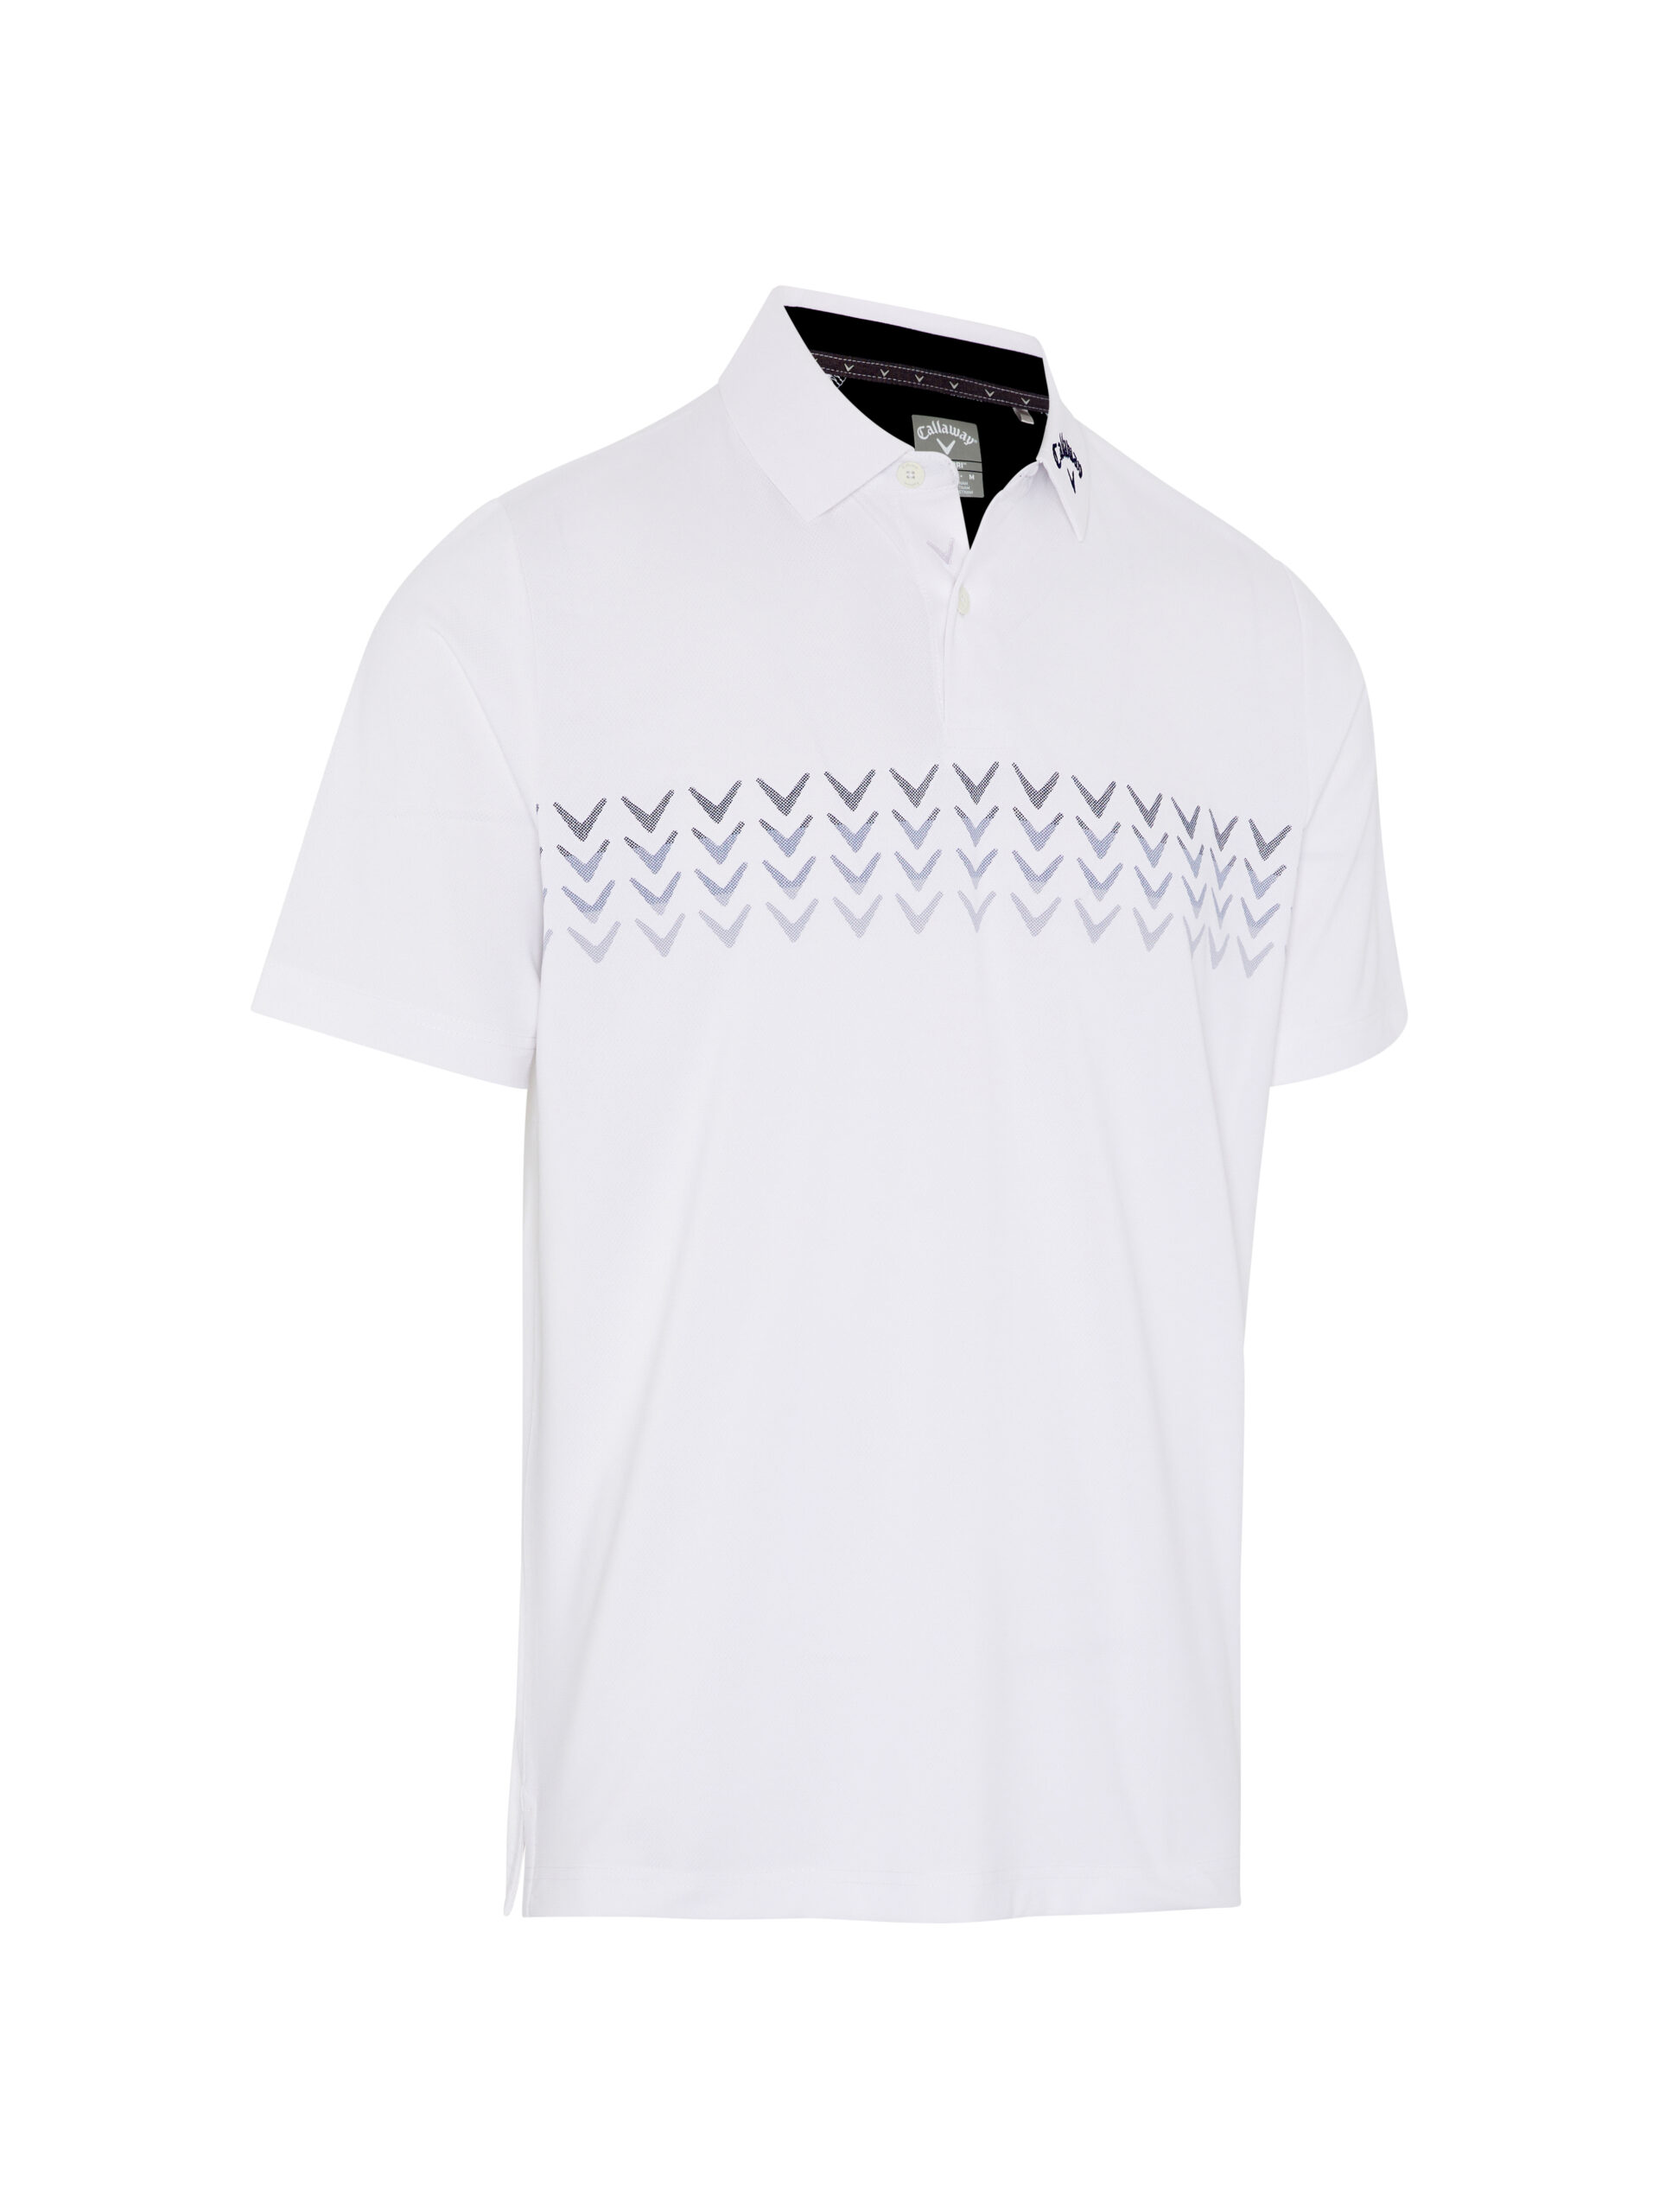 Levně Callaway Chev Block pánské golfové triko, bílé